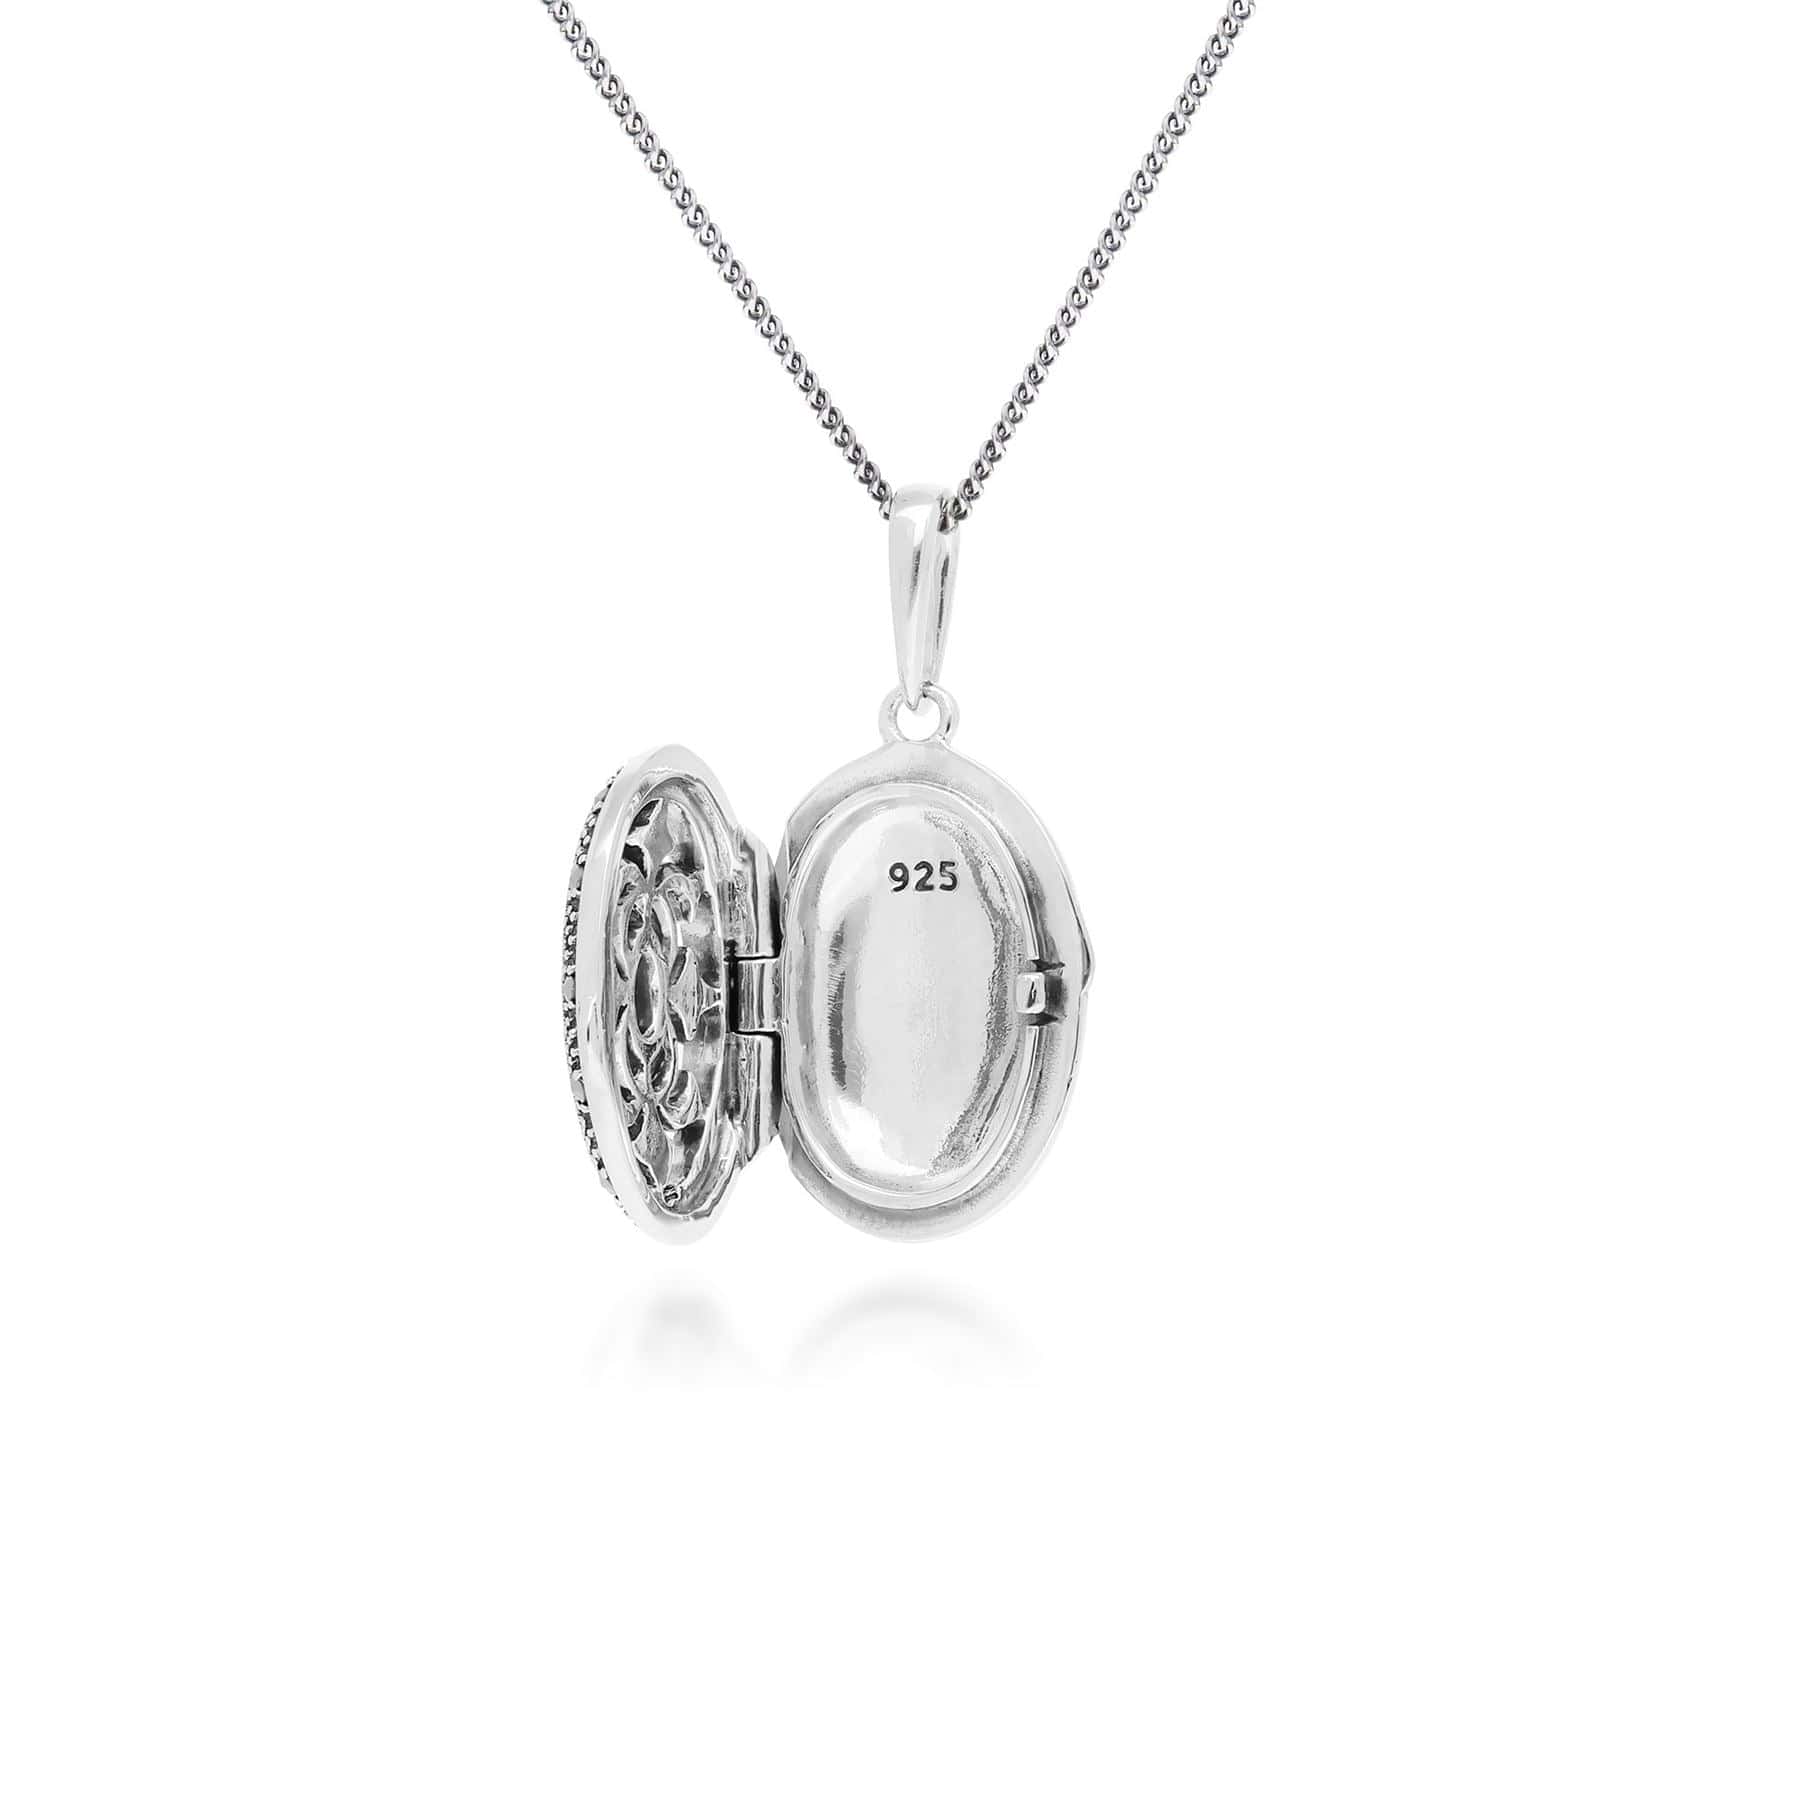 Art Nouveau Style Oval Garnet & Marcasite Locket Necklace in Sterling Silver - Gemondo